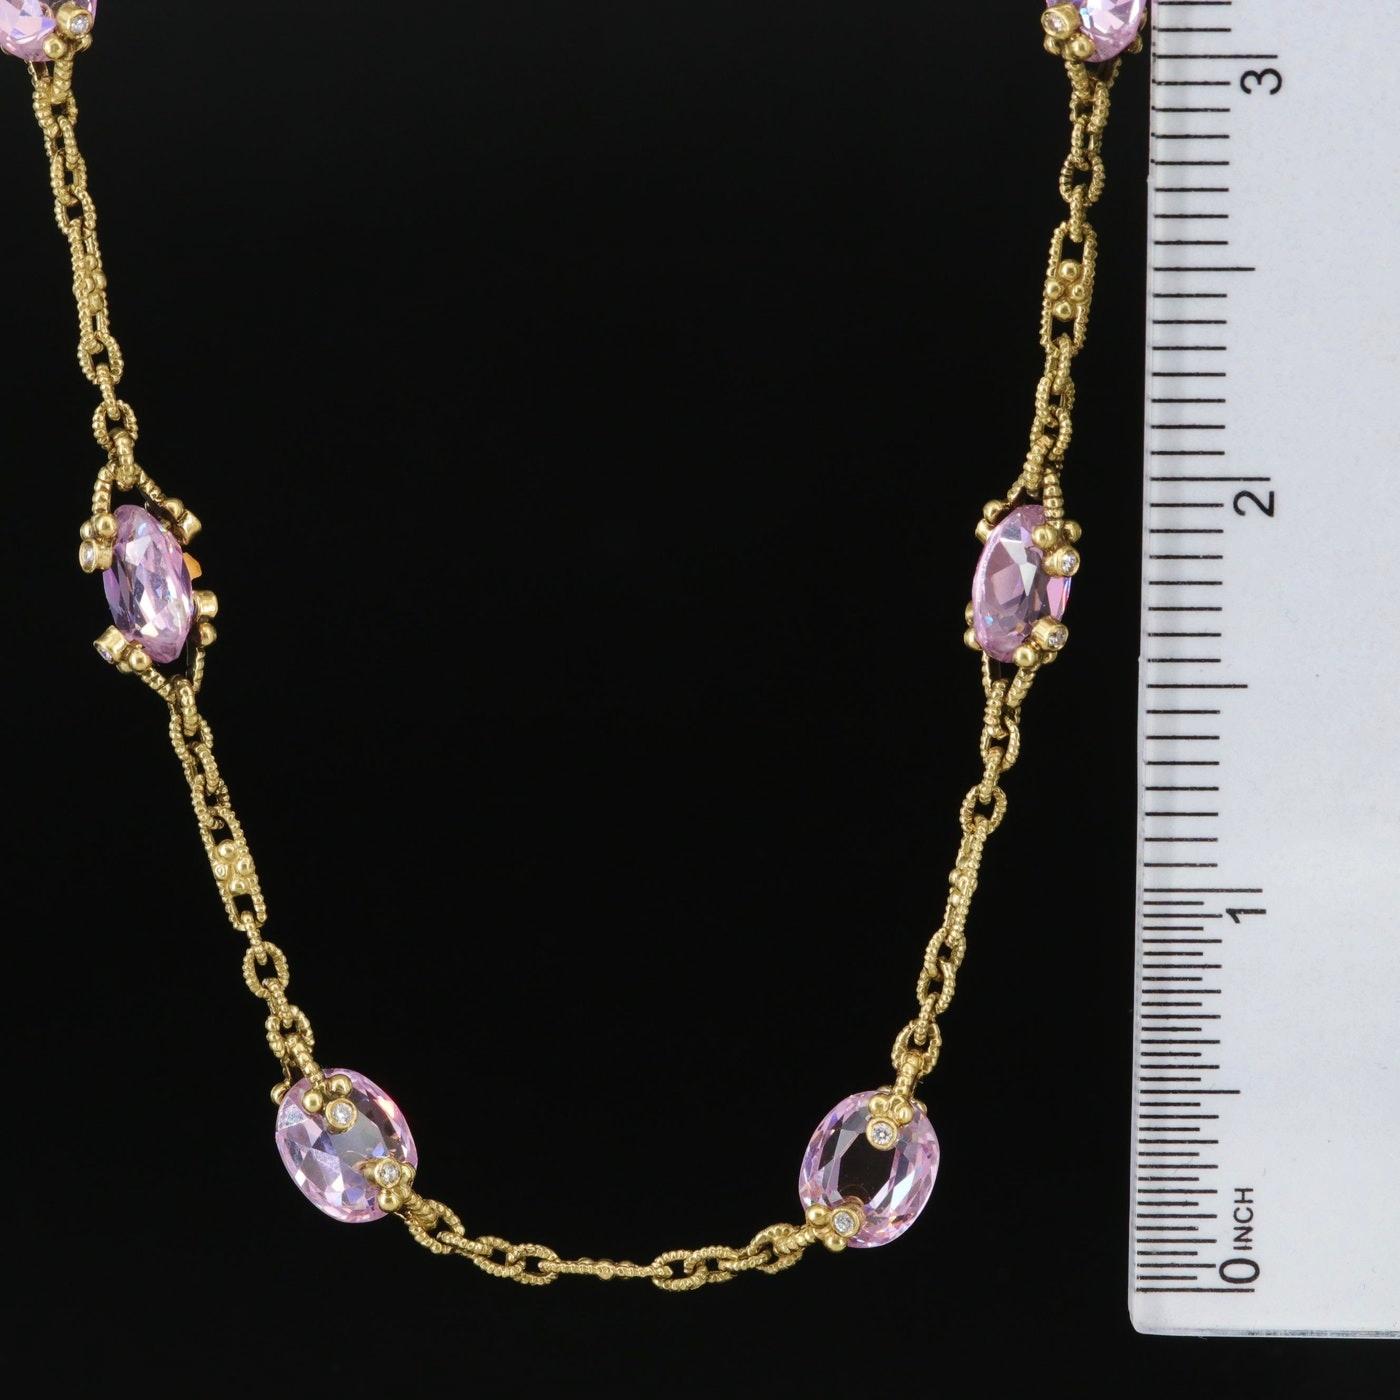 Oval Cut Judith Ripka / 27.5 Ct Diamond & Sapphire Necklace / 23.8 Grams / 18K